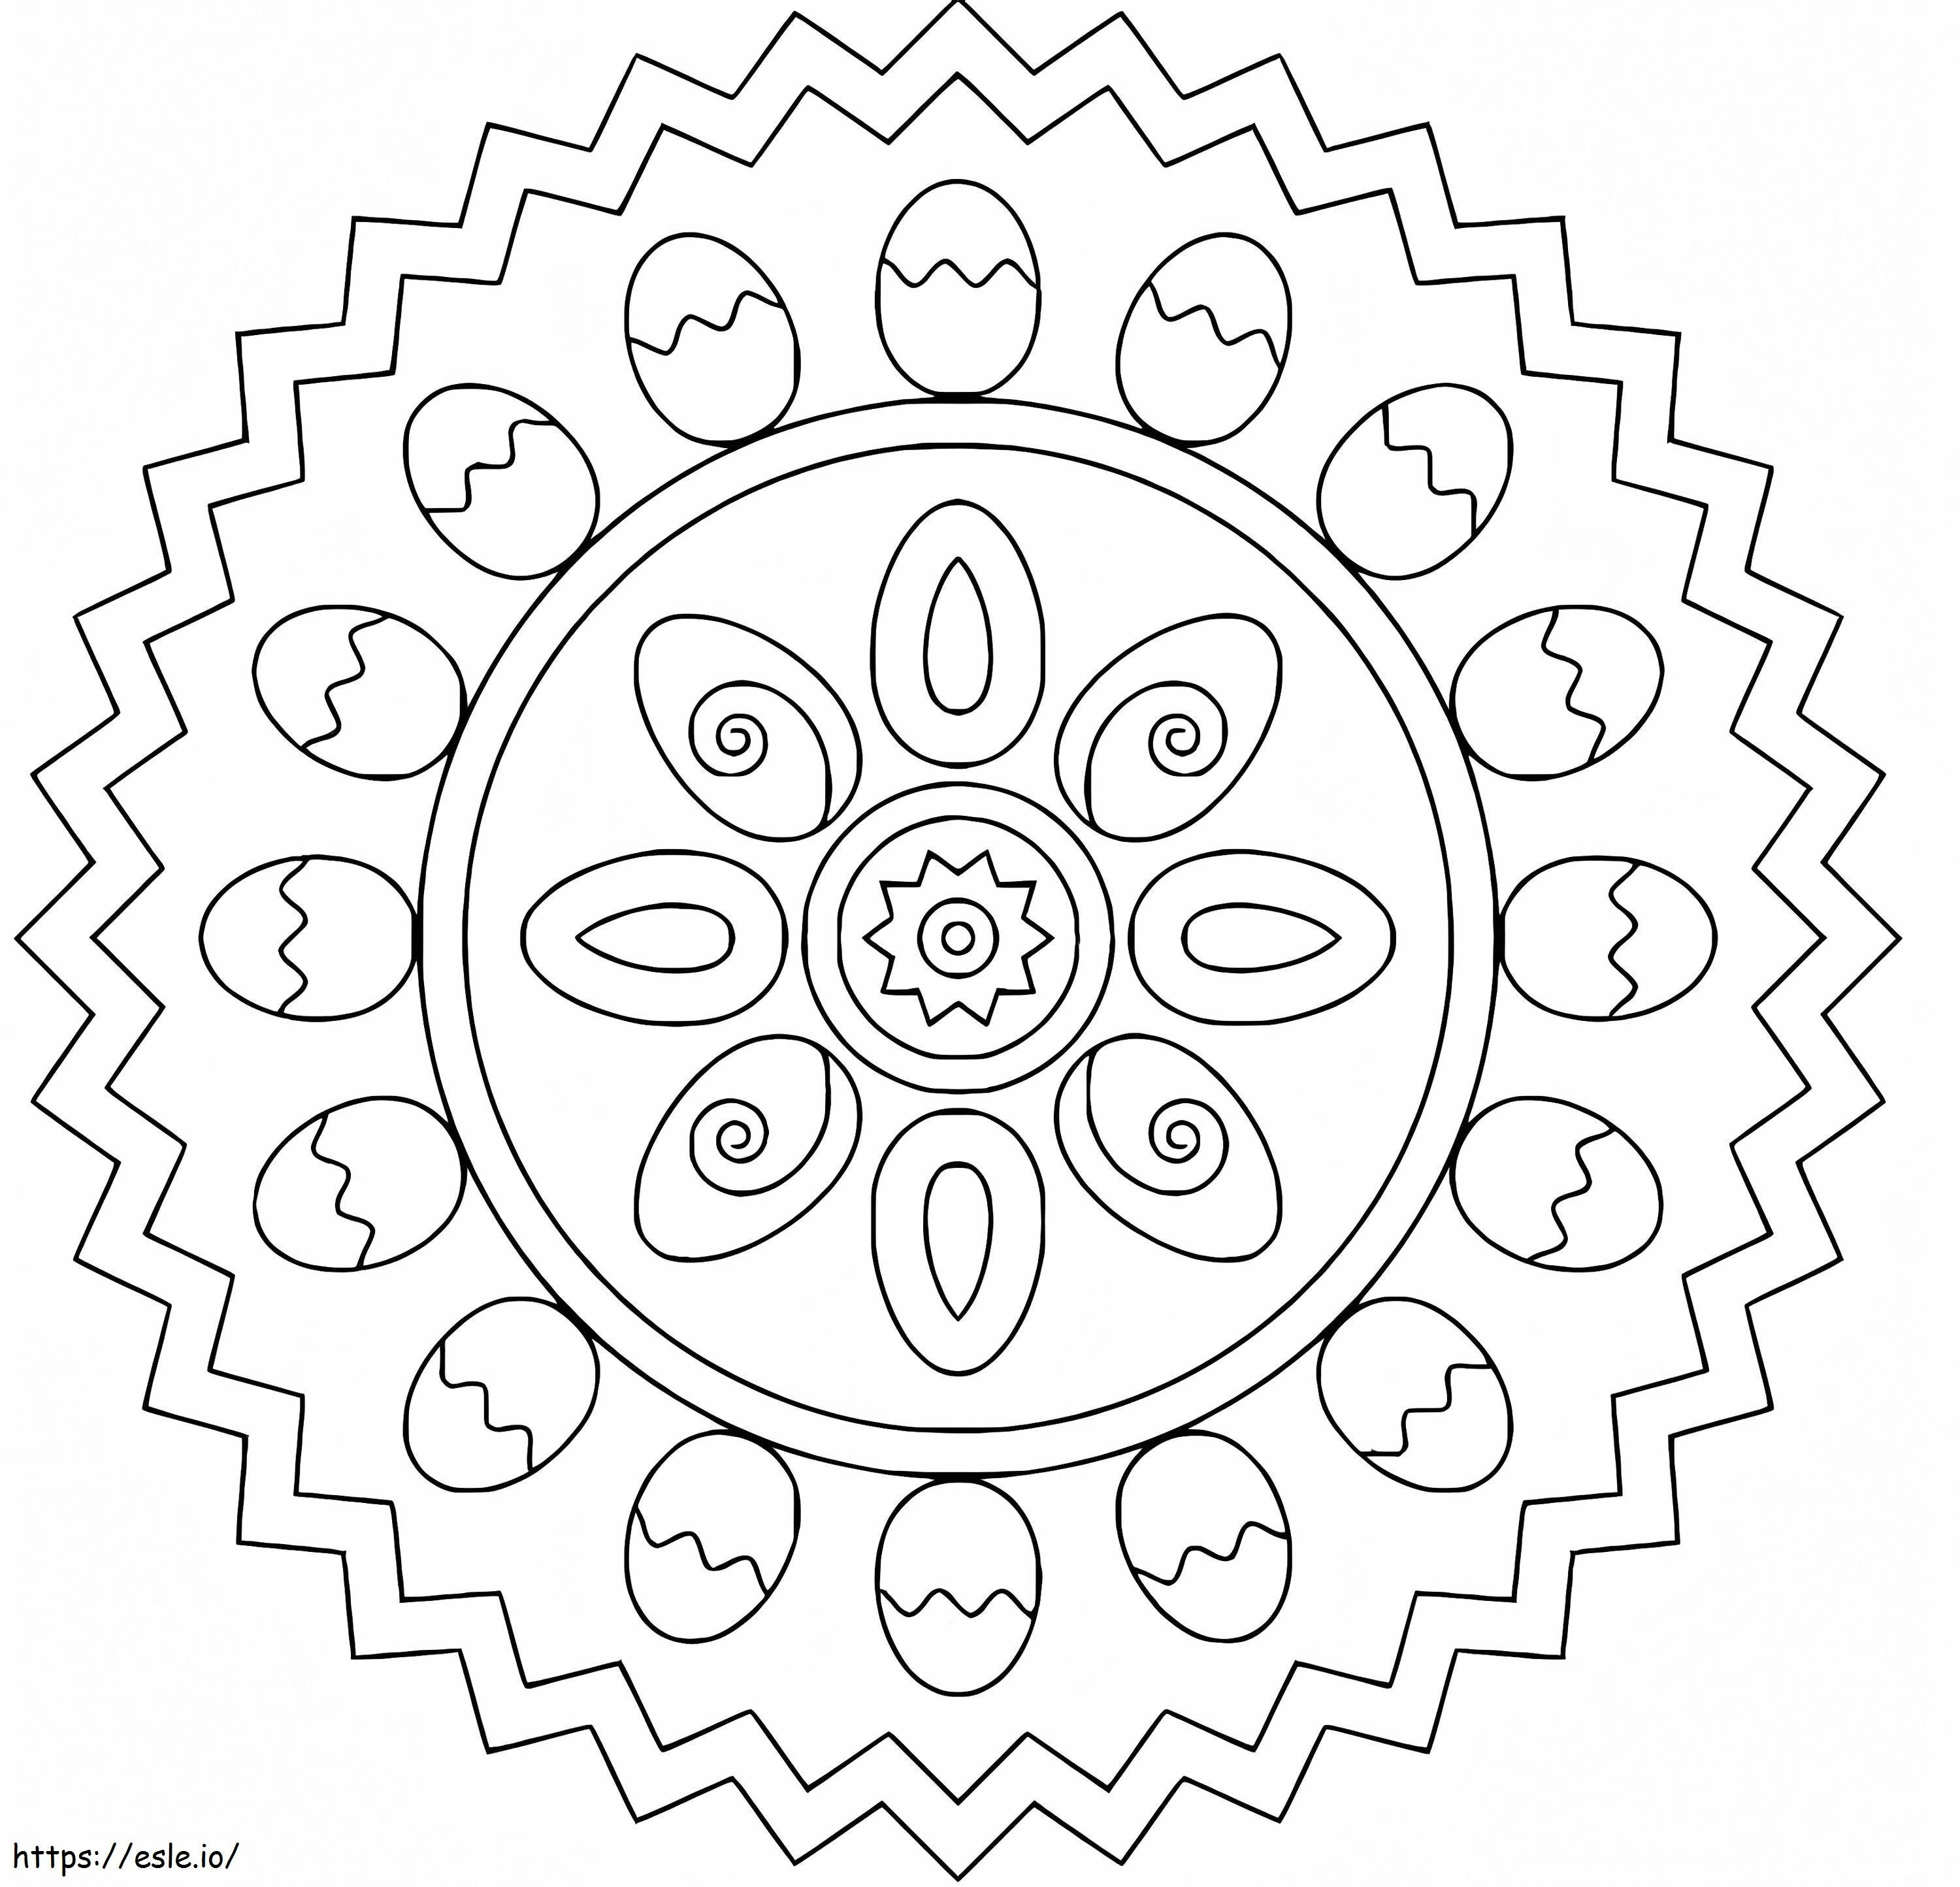 Mandala Wielkanocna 2 kolorowanka